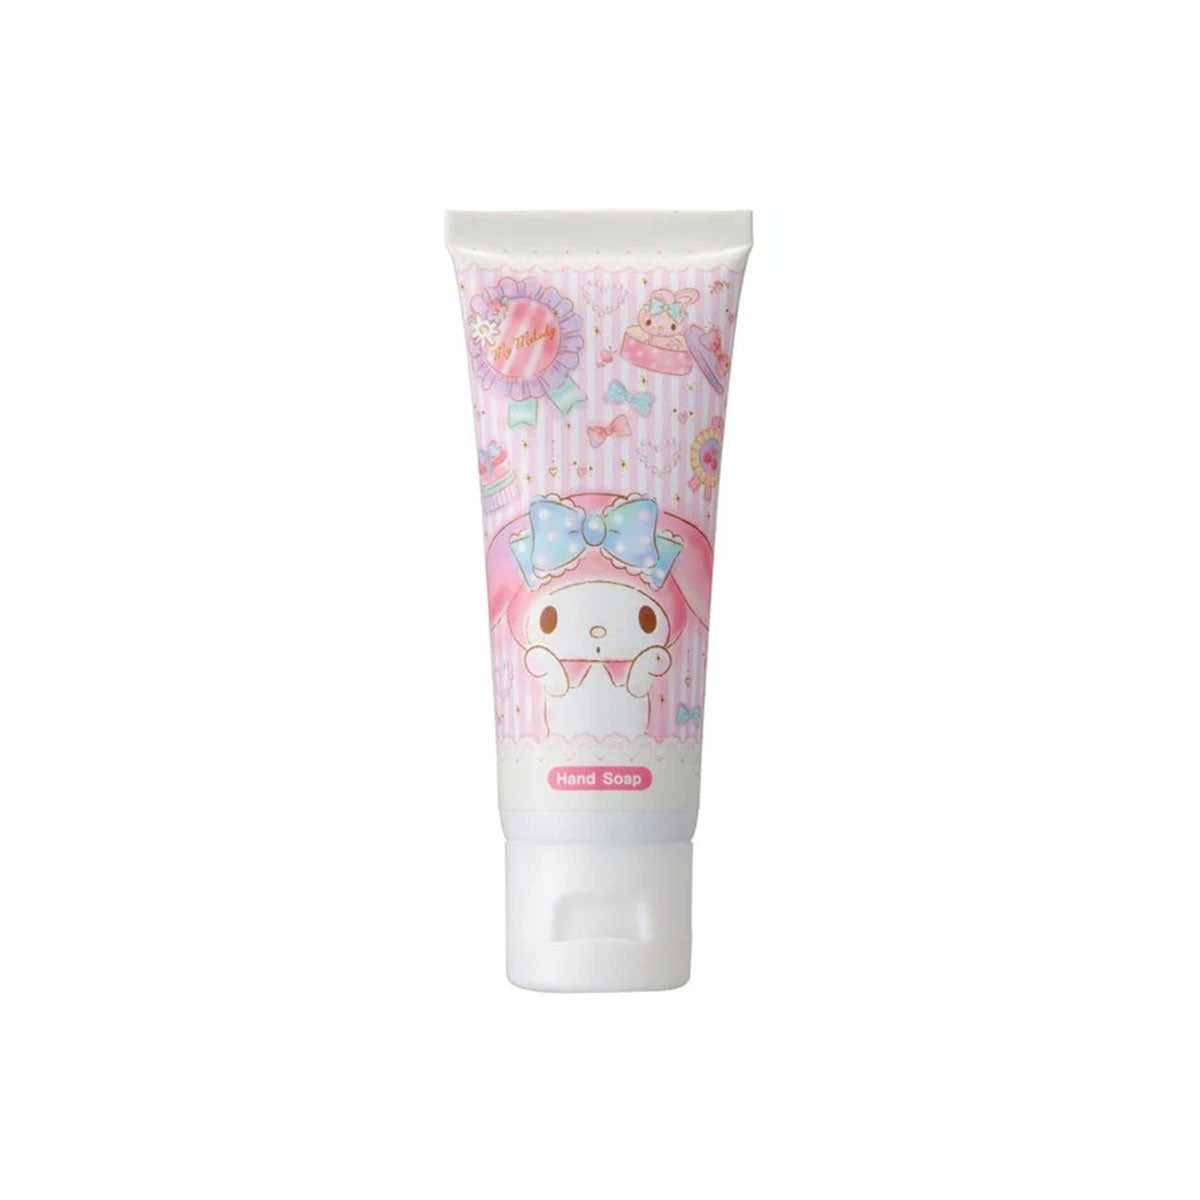 Sanrio Hand Soap #My Melody 40g